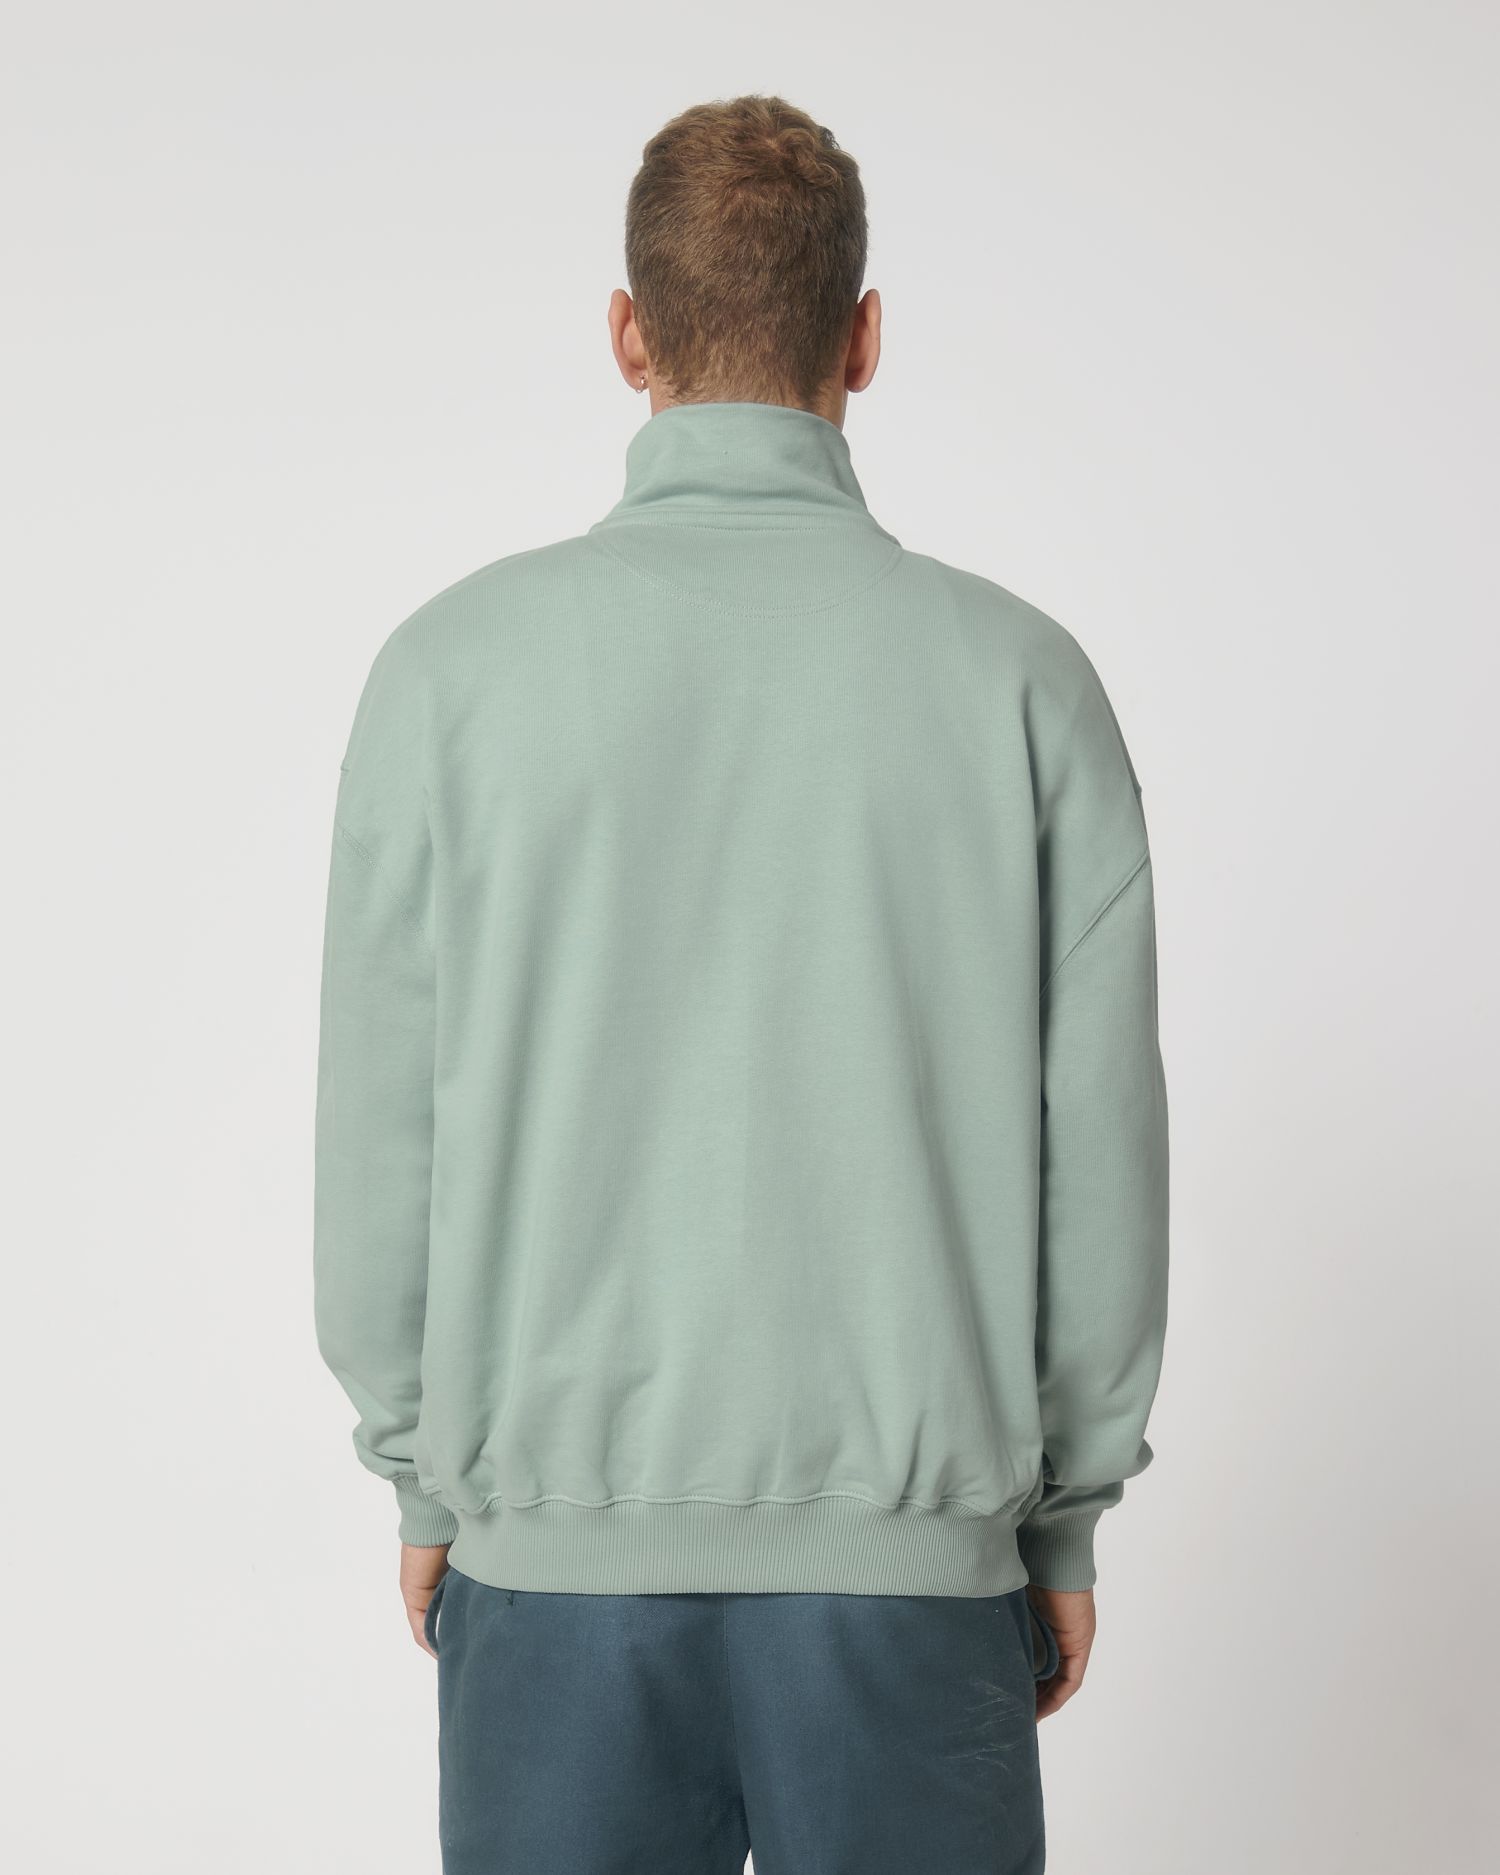 Crew neck sweatshirts Miller Dry in Farbe Aloe